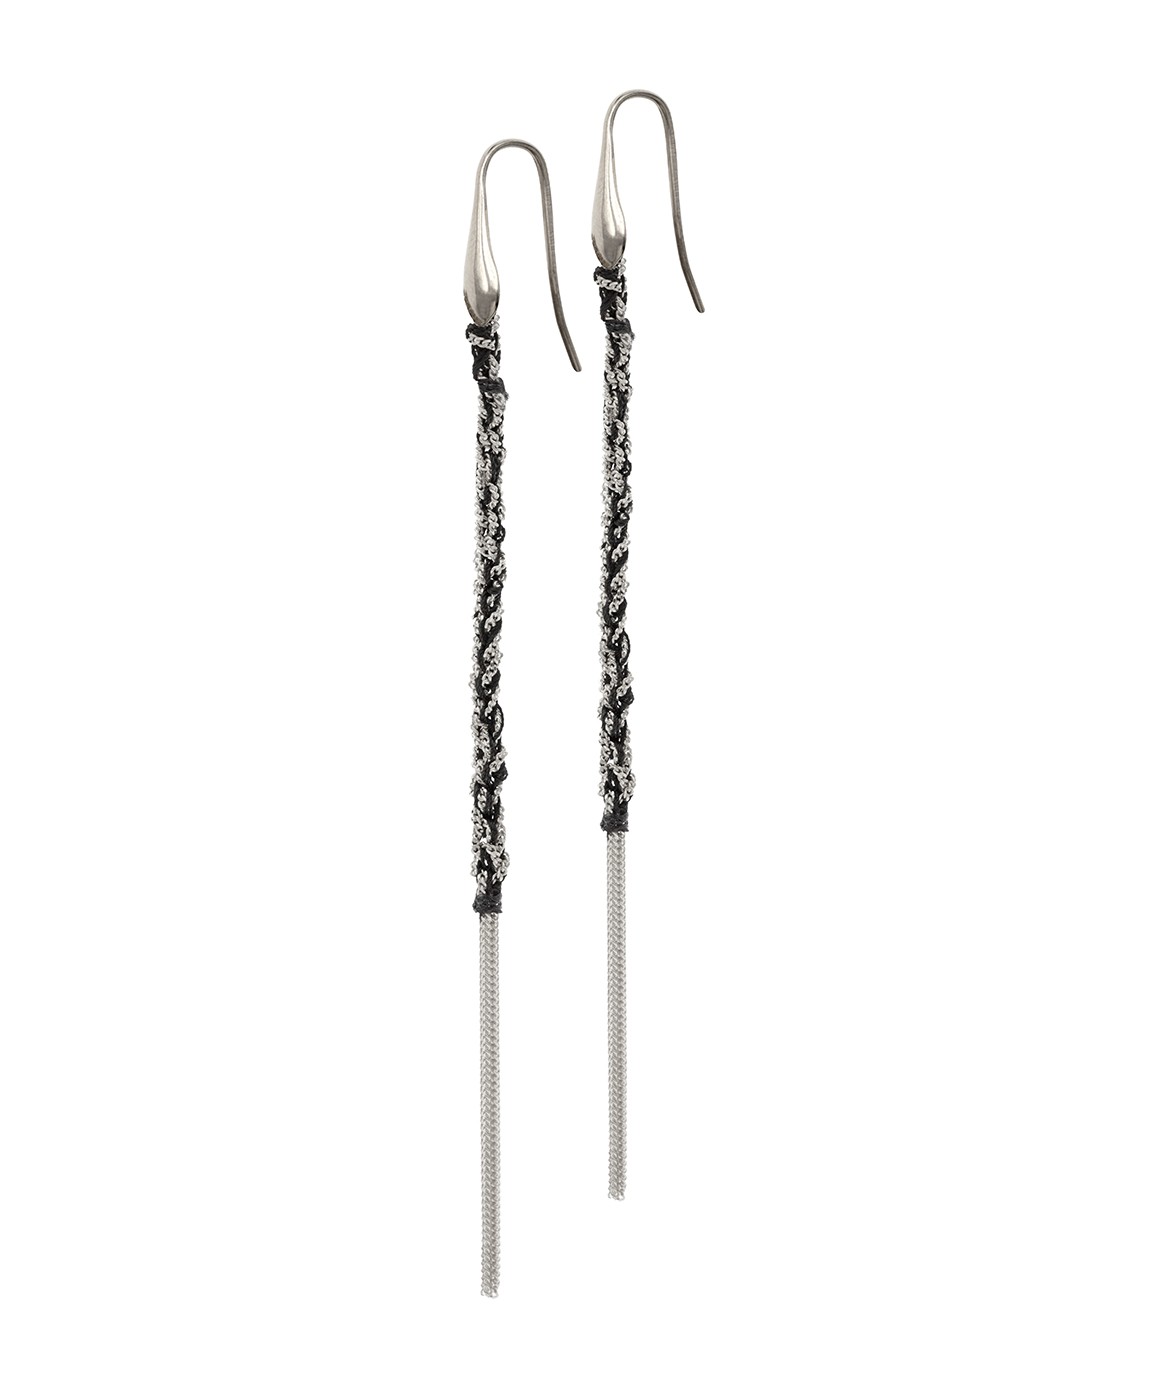 TWIST Earrings in Sterling Silver Rhodium plated. Fabric: Black